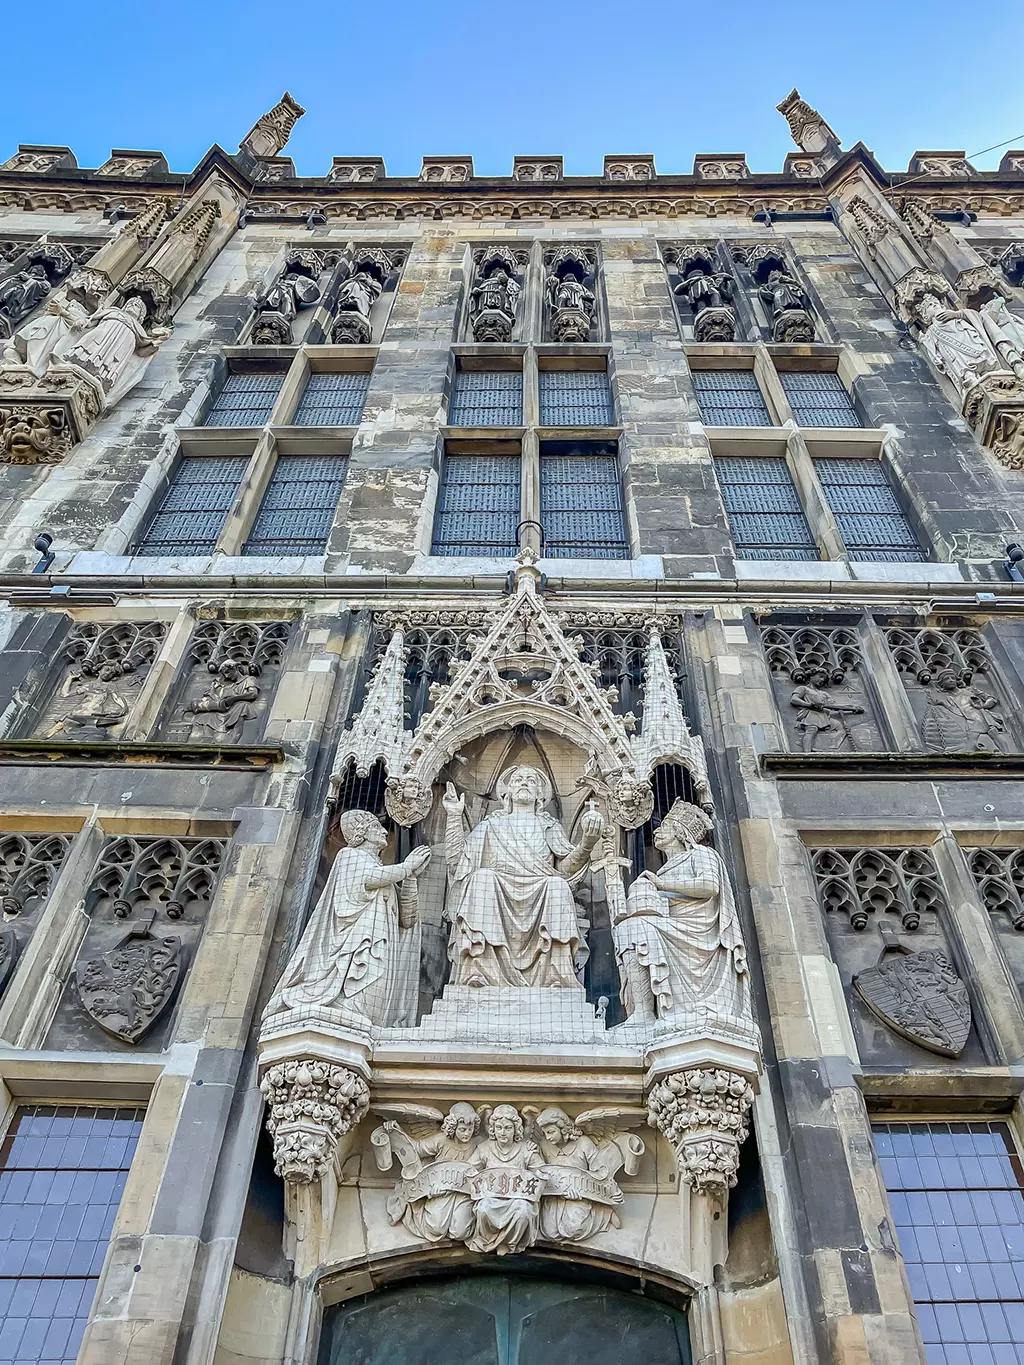 Visiter Aix-la-Chapelle (Aachen) en 1 week-end